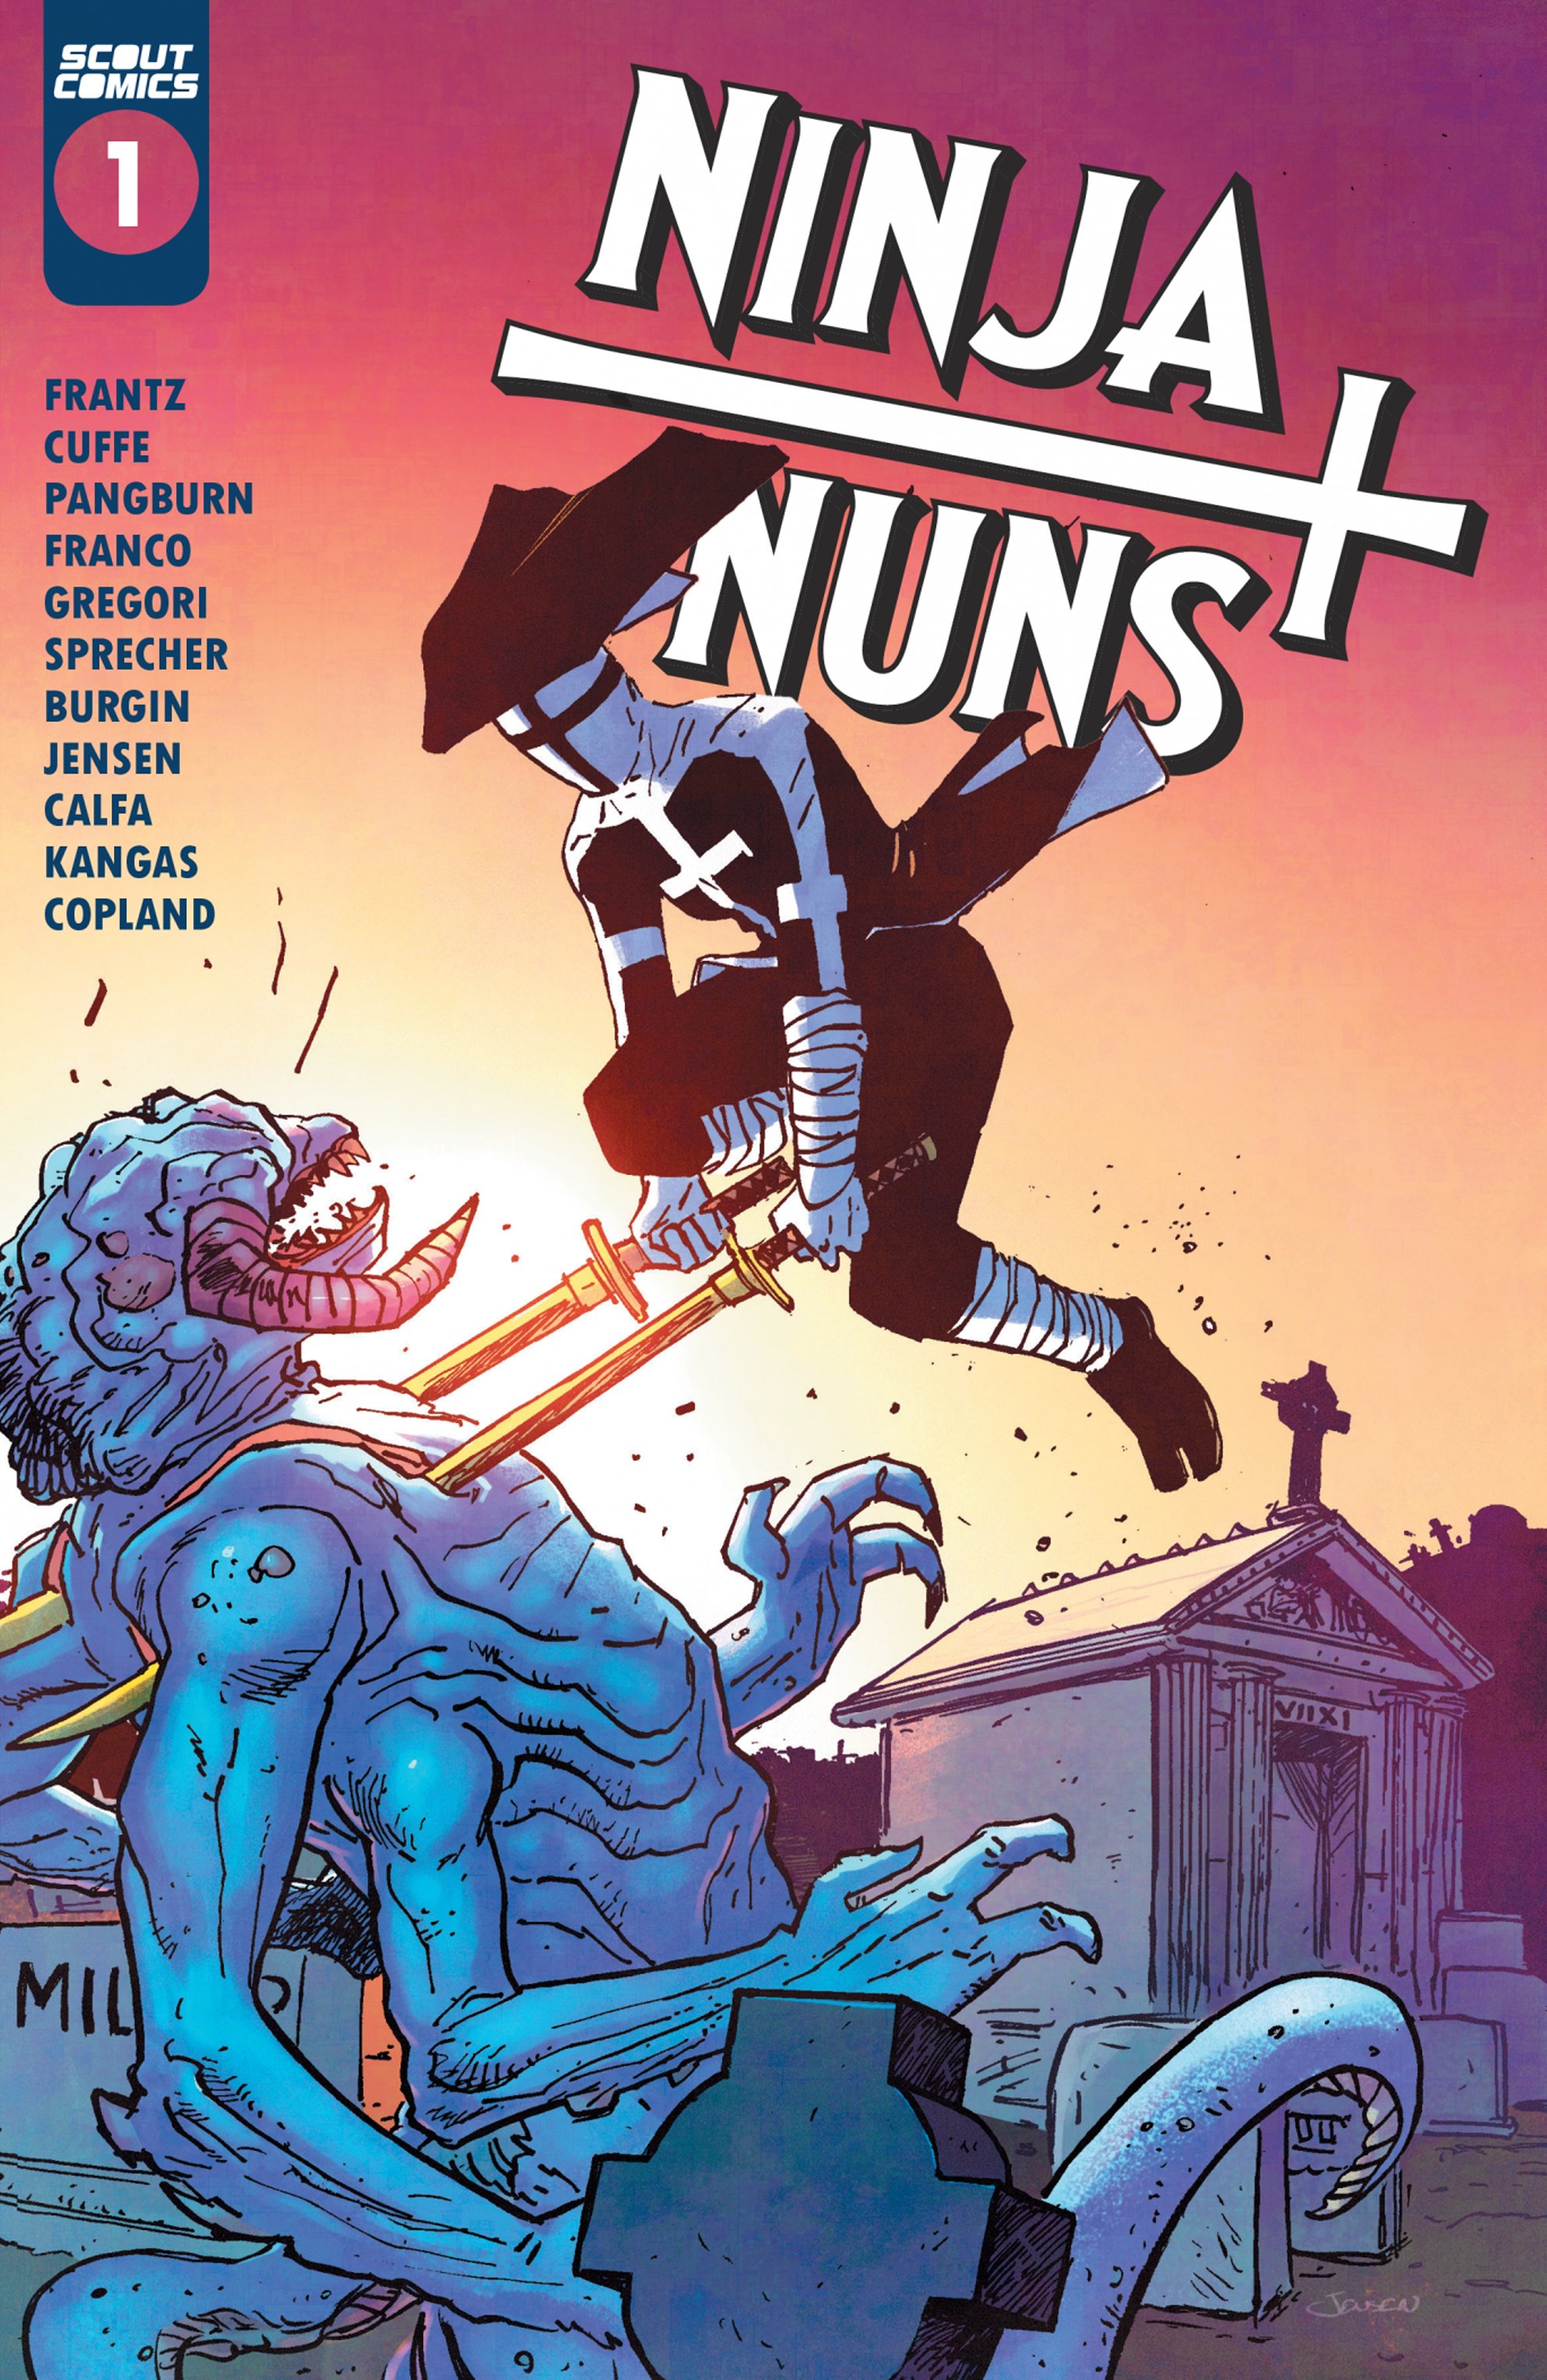 Read online Ninja Nuns comic -  Issue # Full - 1